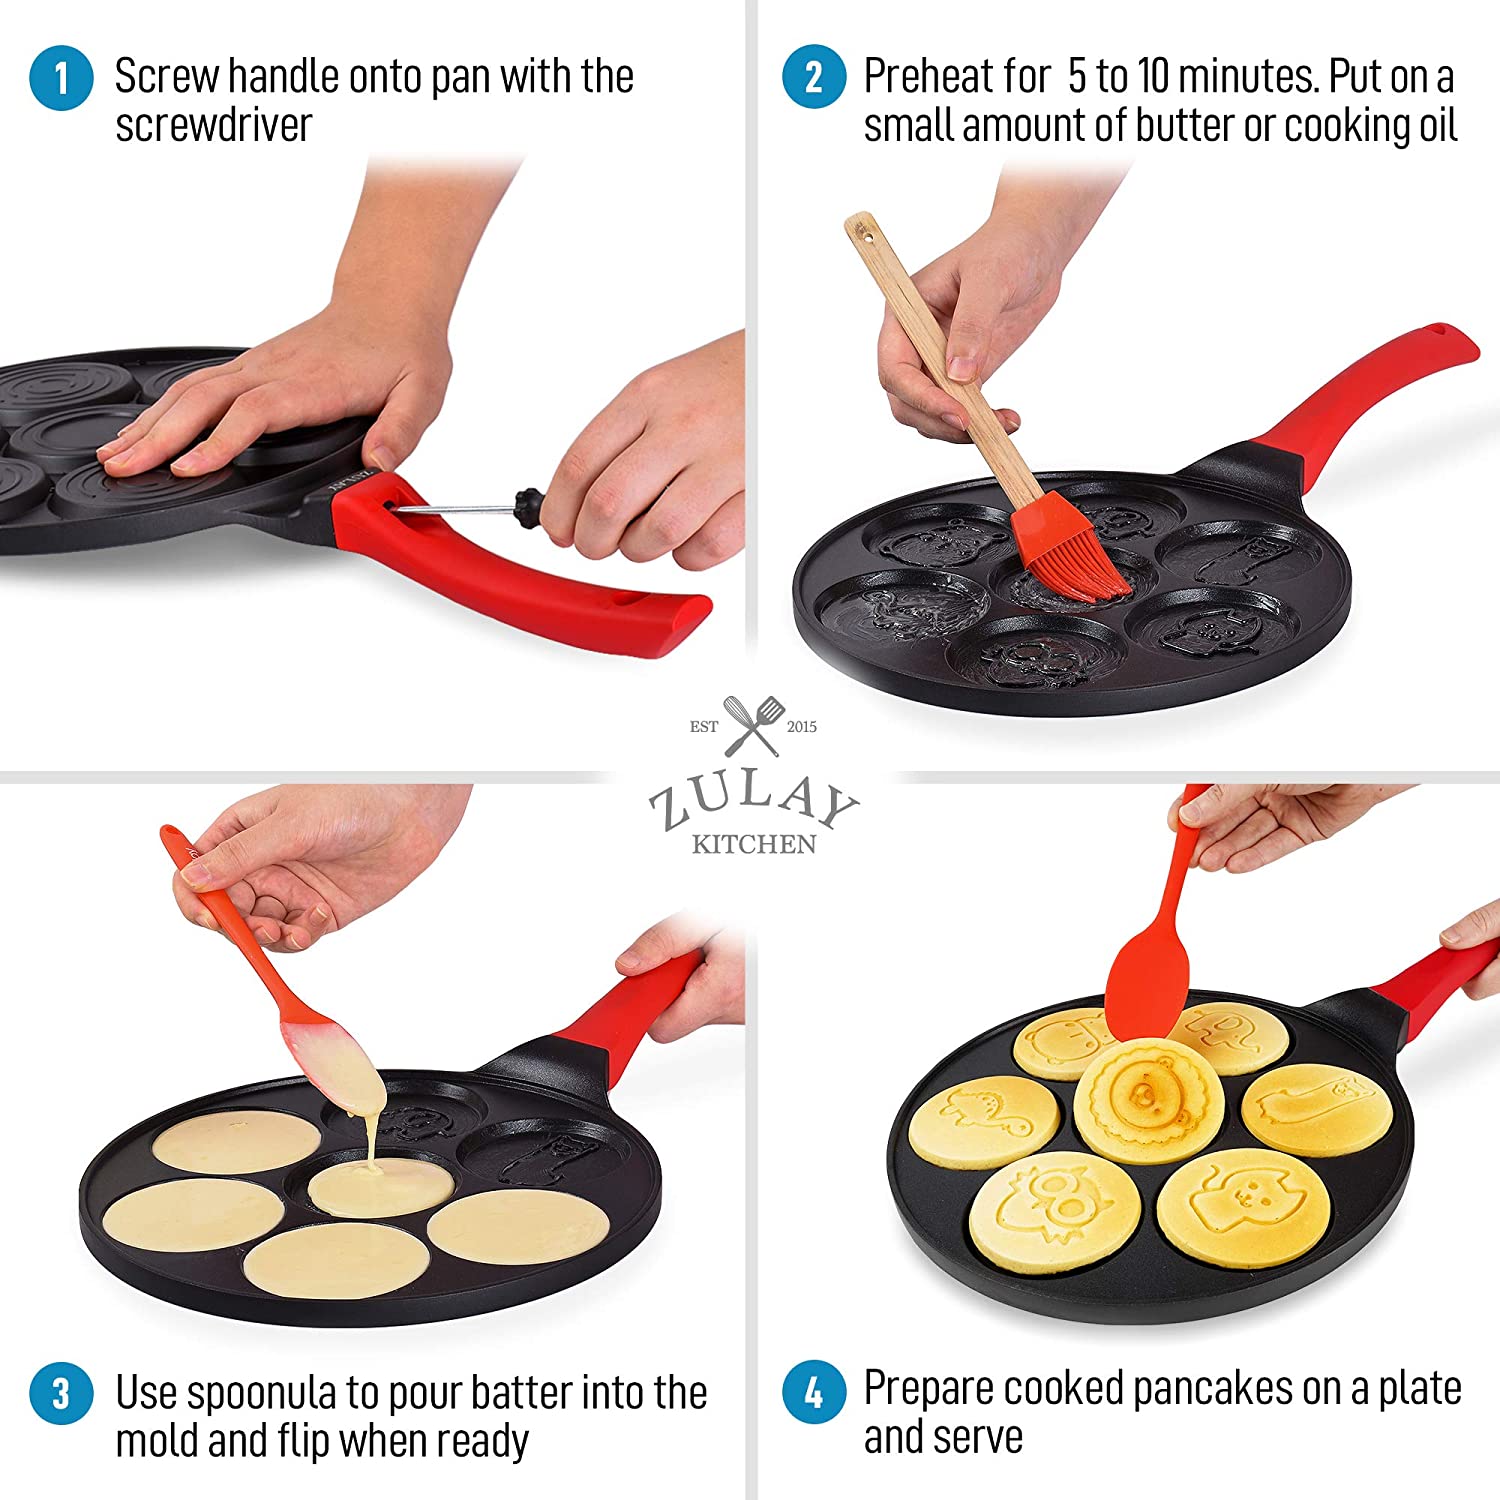 Pancake Pan With 7 Animal Face Designs Plus 2 Bonus Spatulas Online